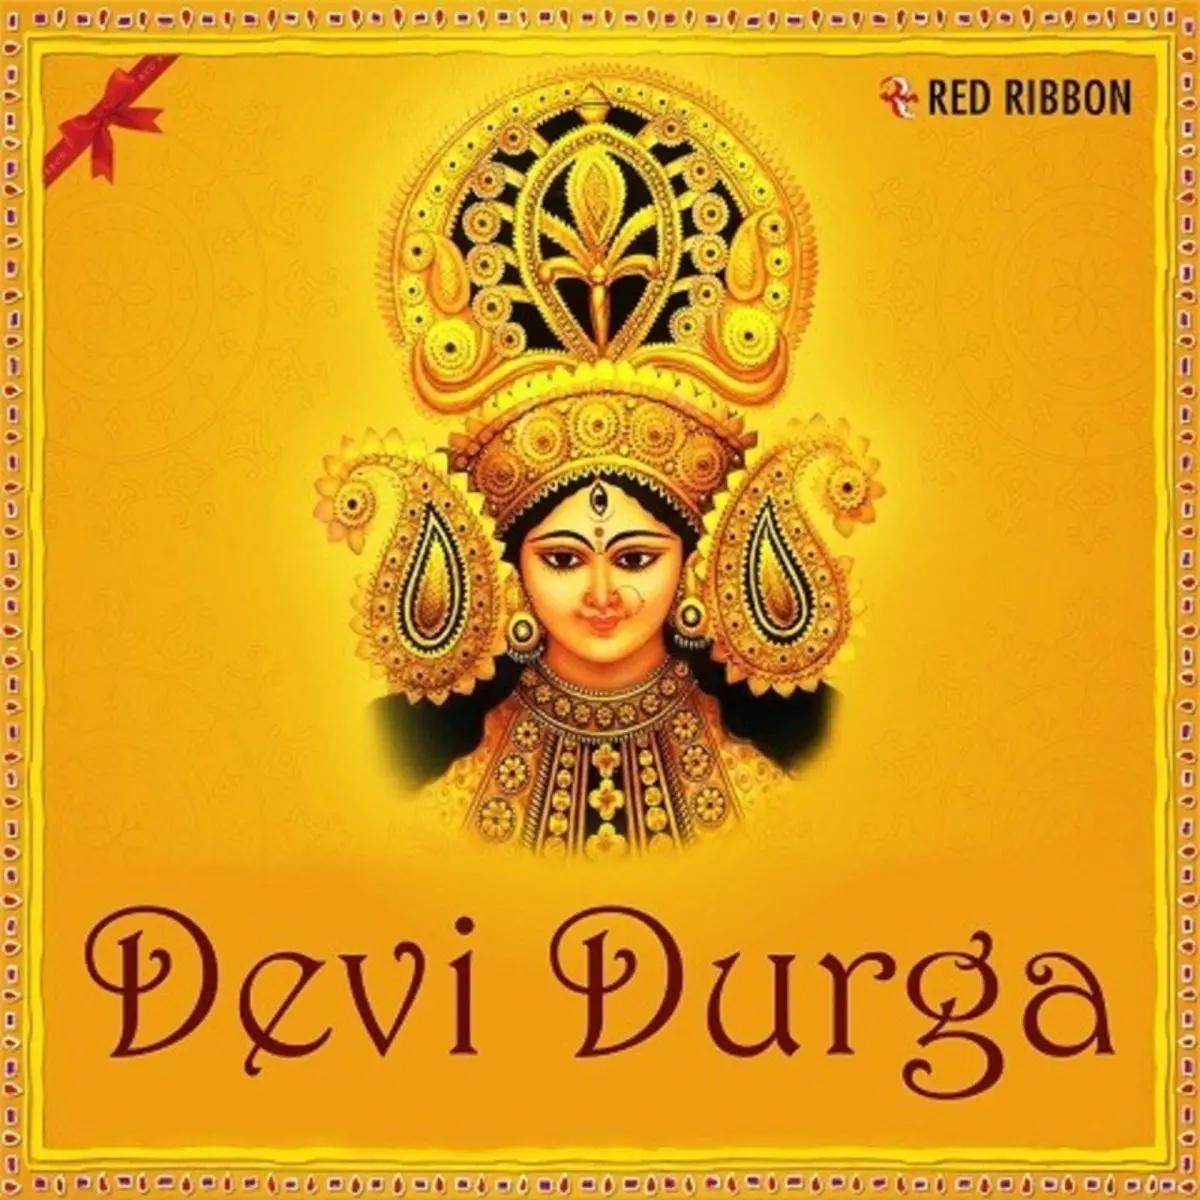 Devi Durga Songs Download Devi Durga Mp3 Songs Online Free On Gaana Com